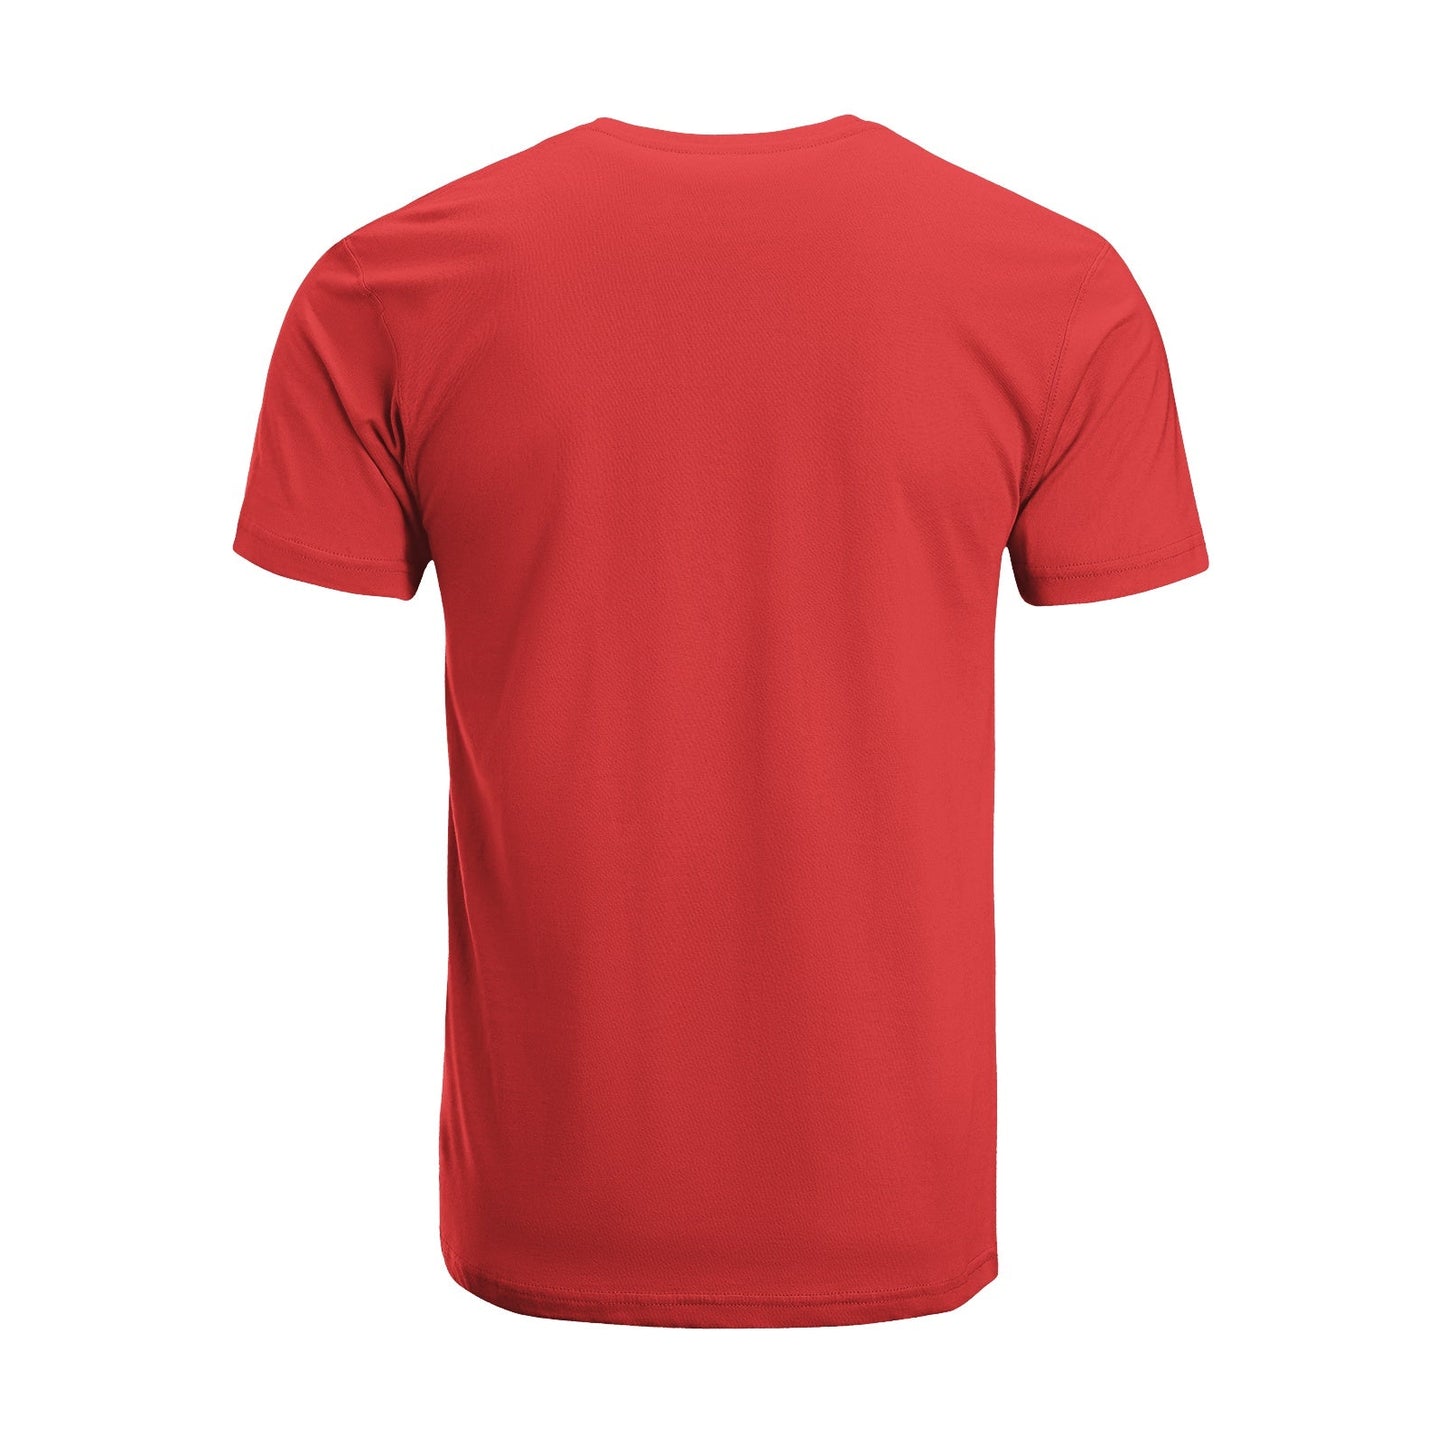 Unisex Short Sleeve Crew Neck Cotton Jersey T-Shirt CAT 29 - Tara-Outfits.com